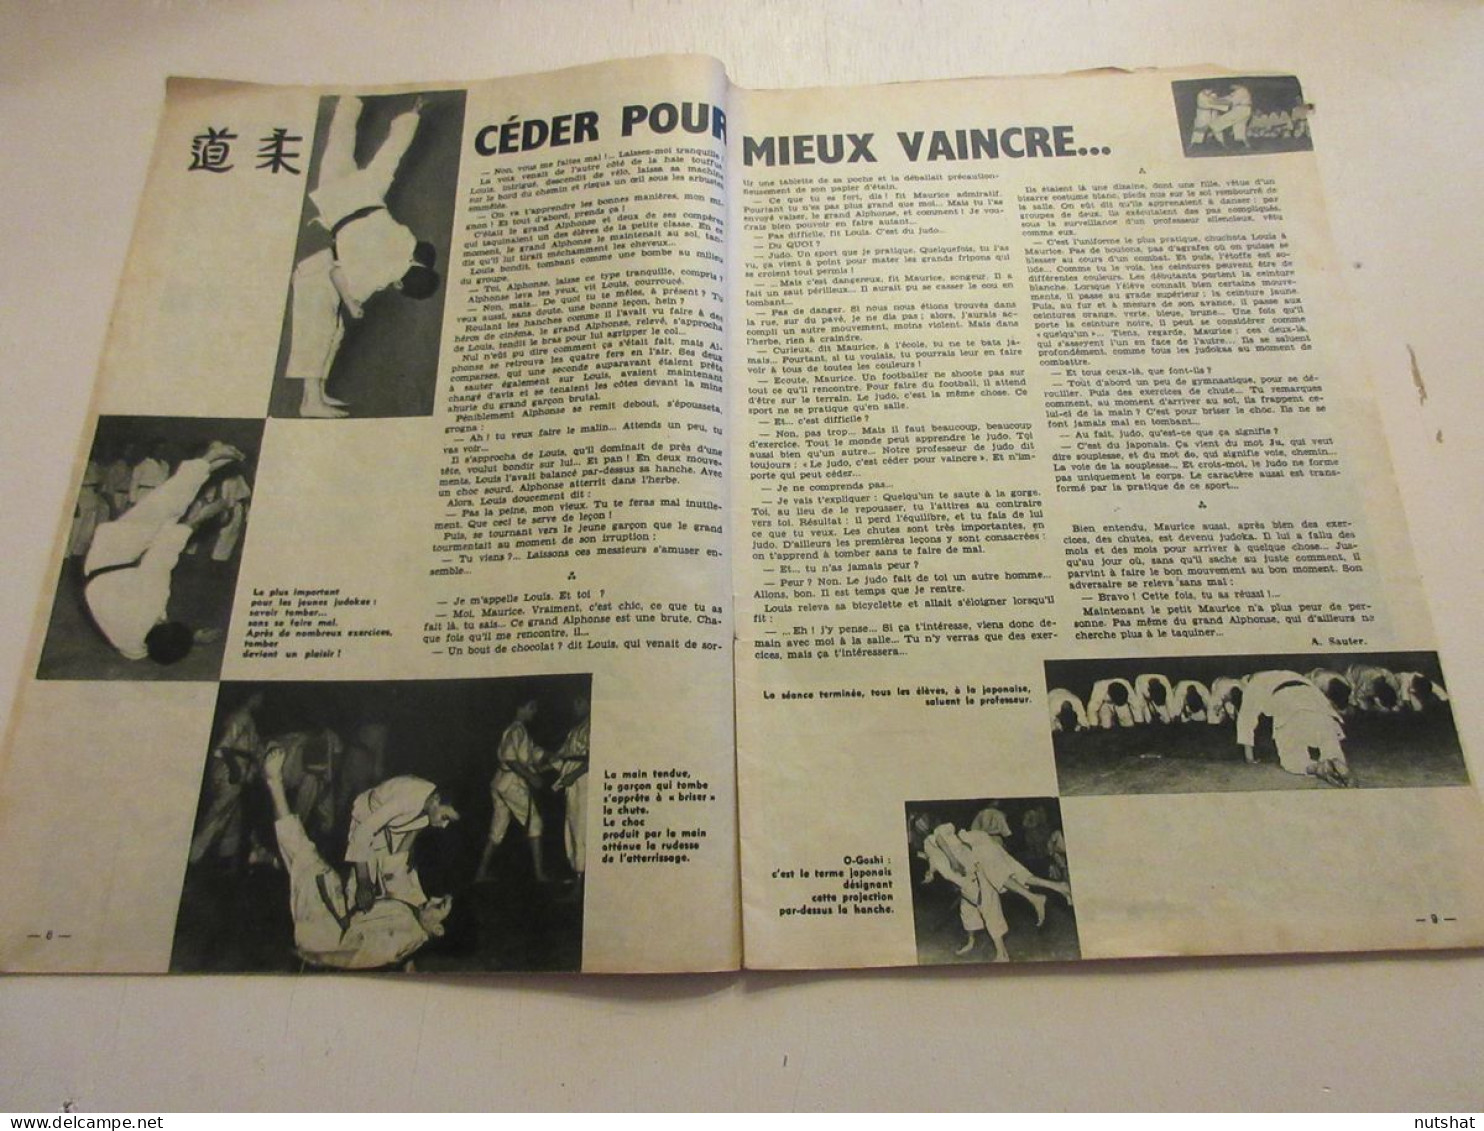 SPIROU 0984 21.02.1957 Le JUDO BOXE Cherif HAMIA BD CHASSEUR De SOUS-MARINS      - Spirou Magazine